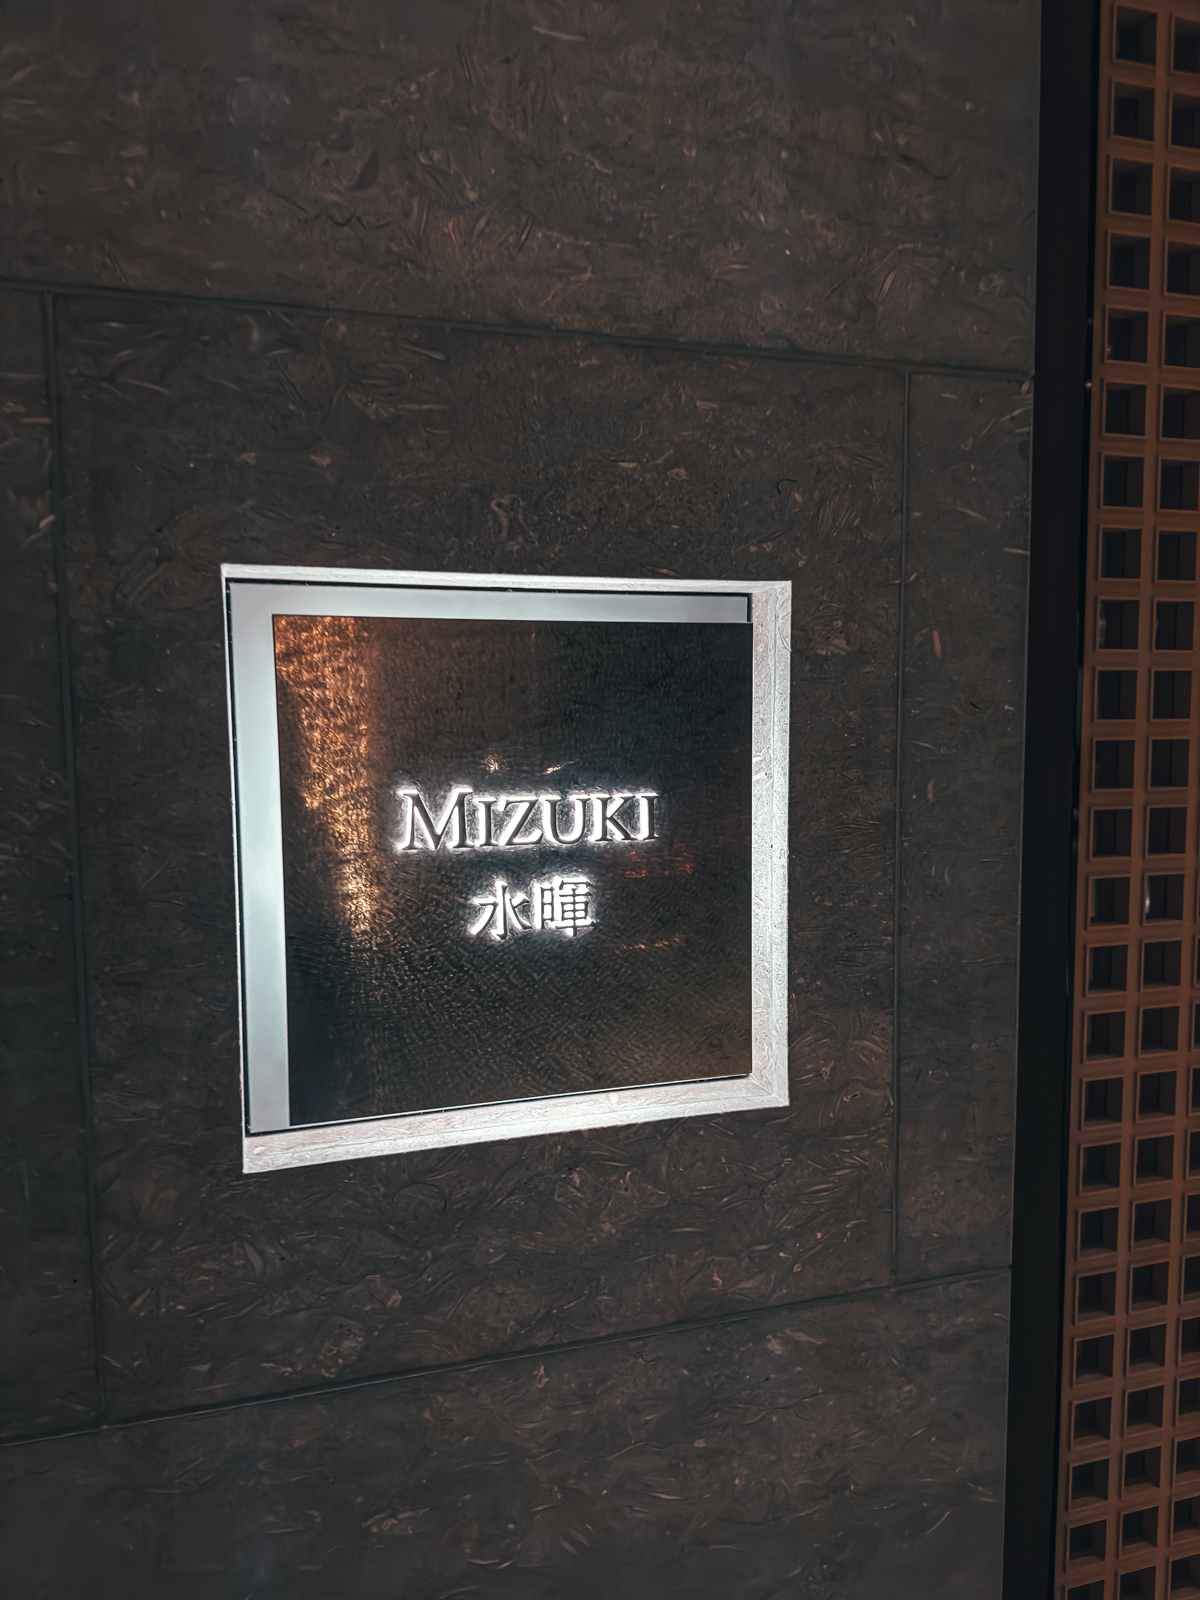 Mizuki restaurant signage